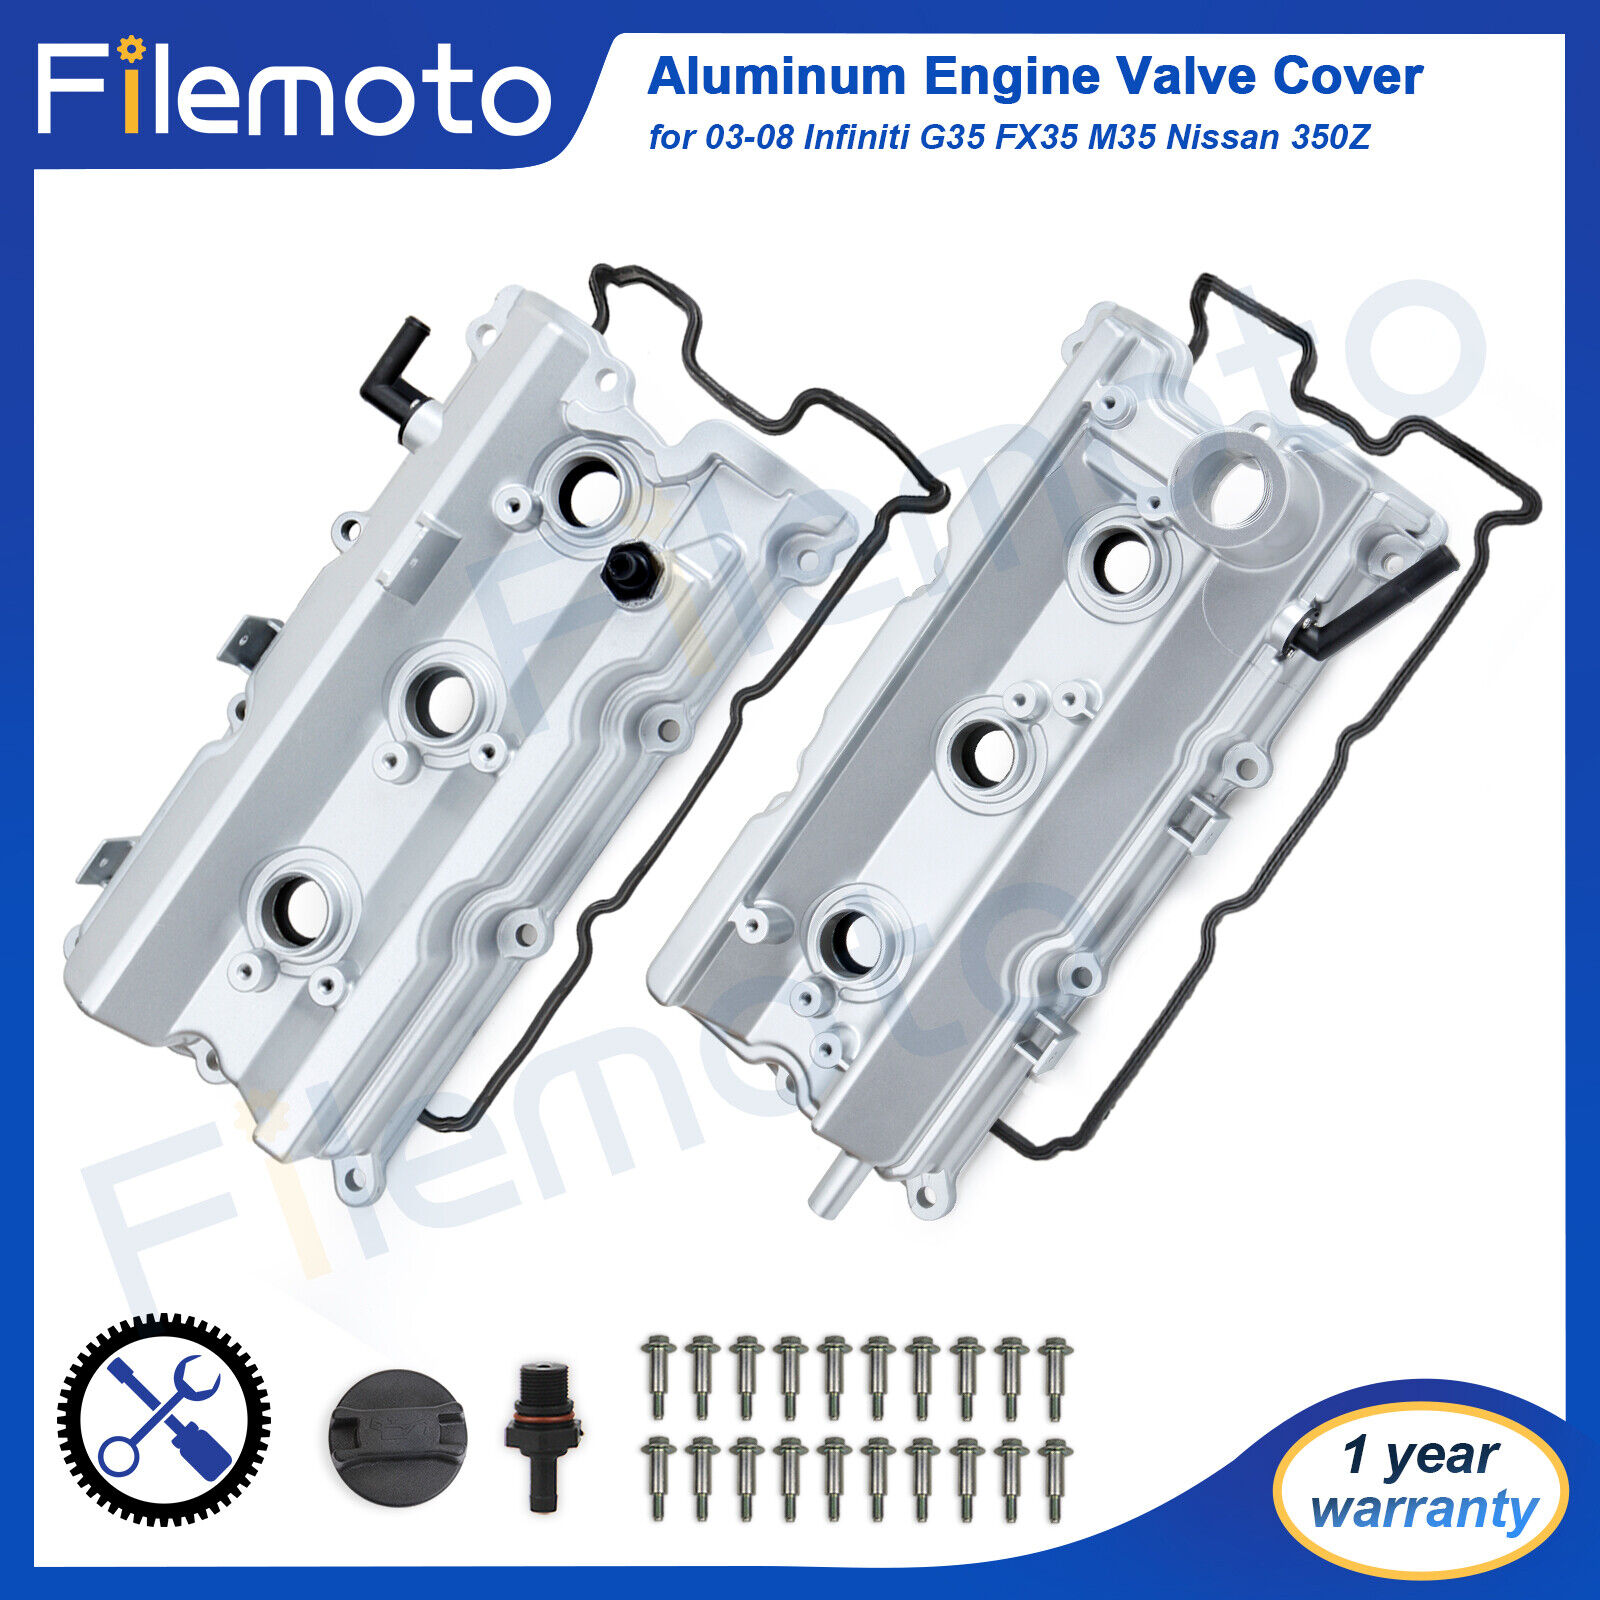 Aluminum Engine Valve Cover w/gasket for 03-08 Infiniti G35 FX35 M35 Nissan 350Z